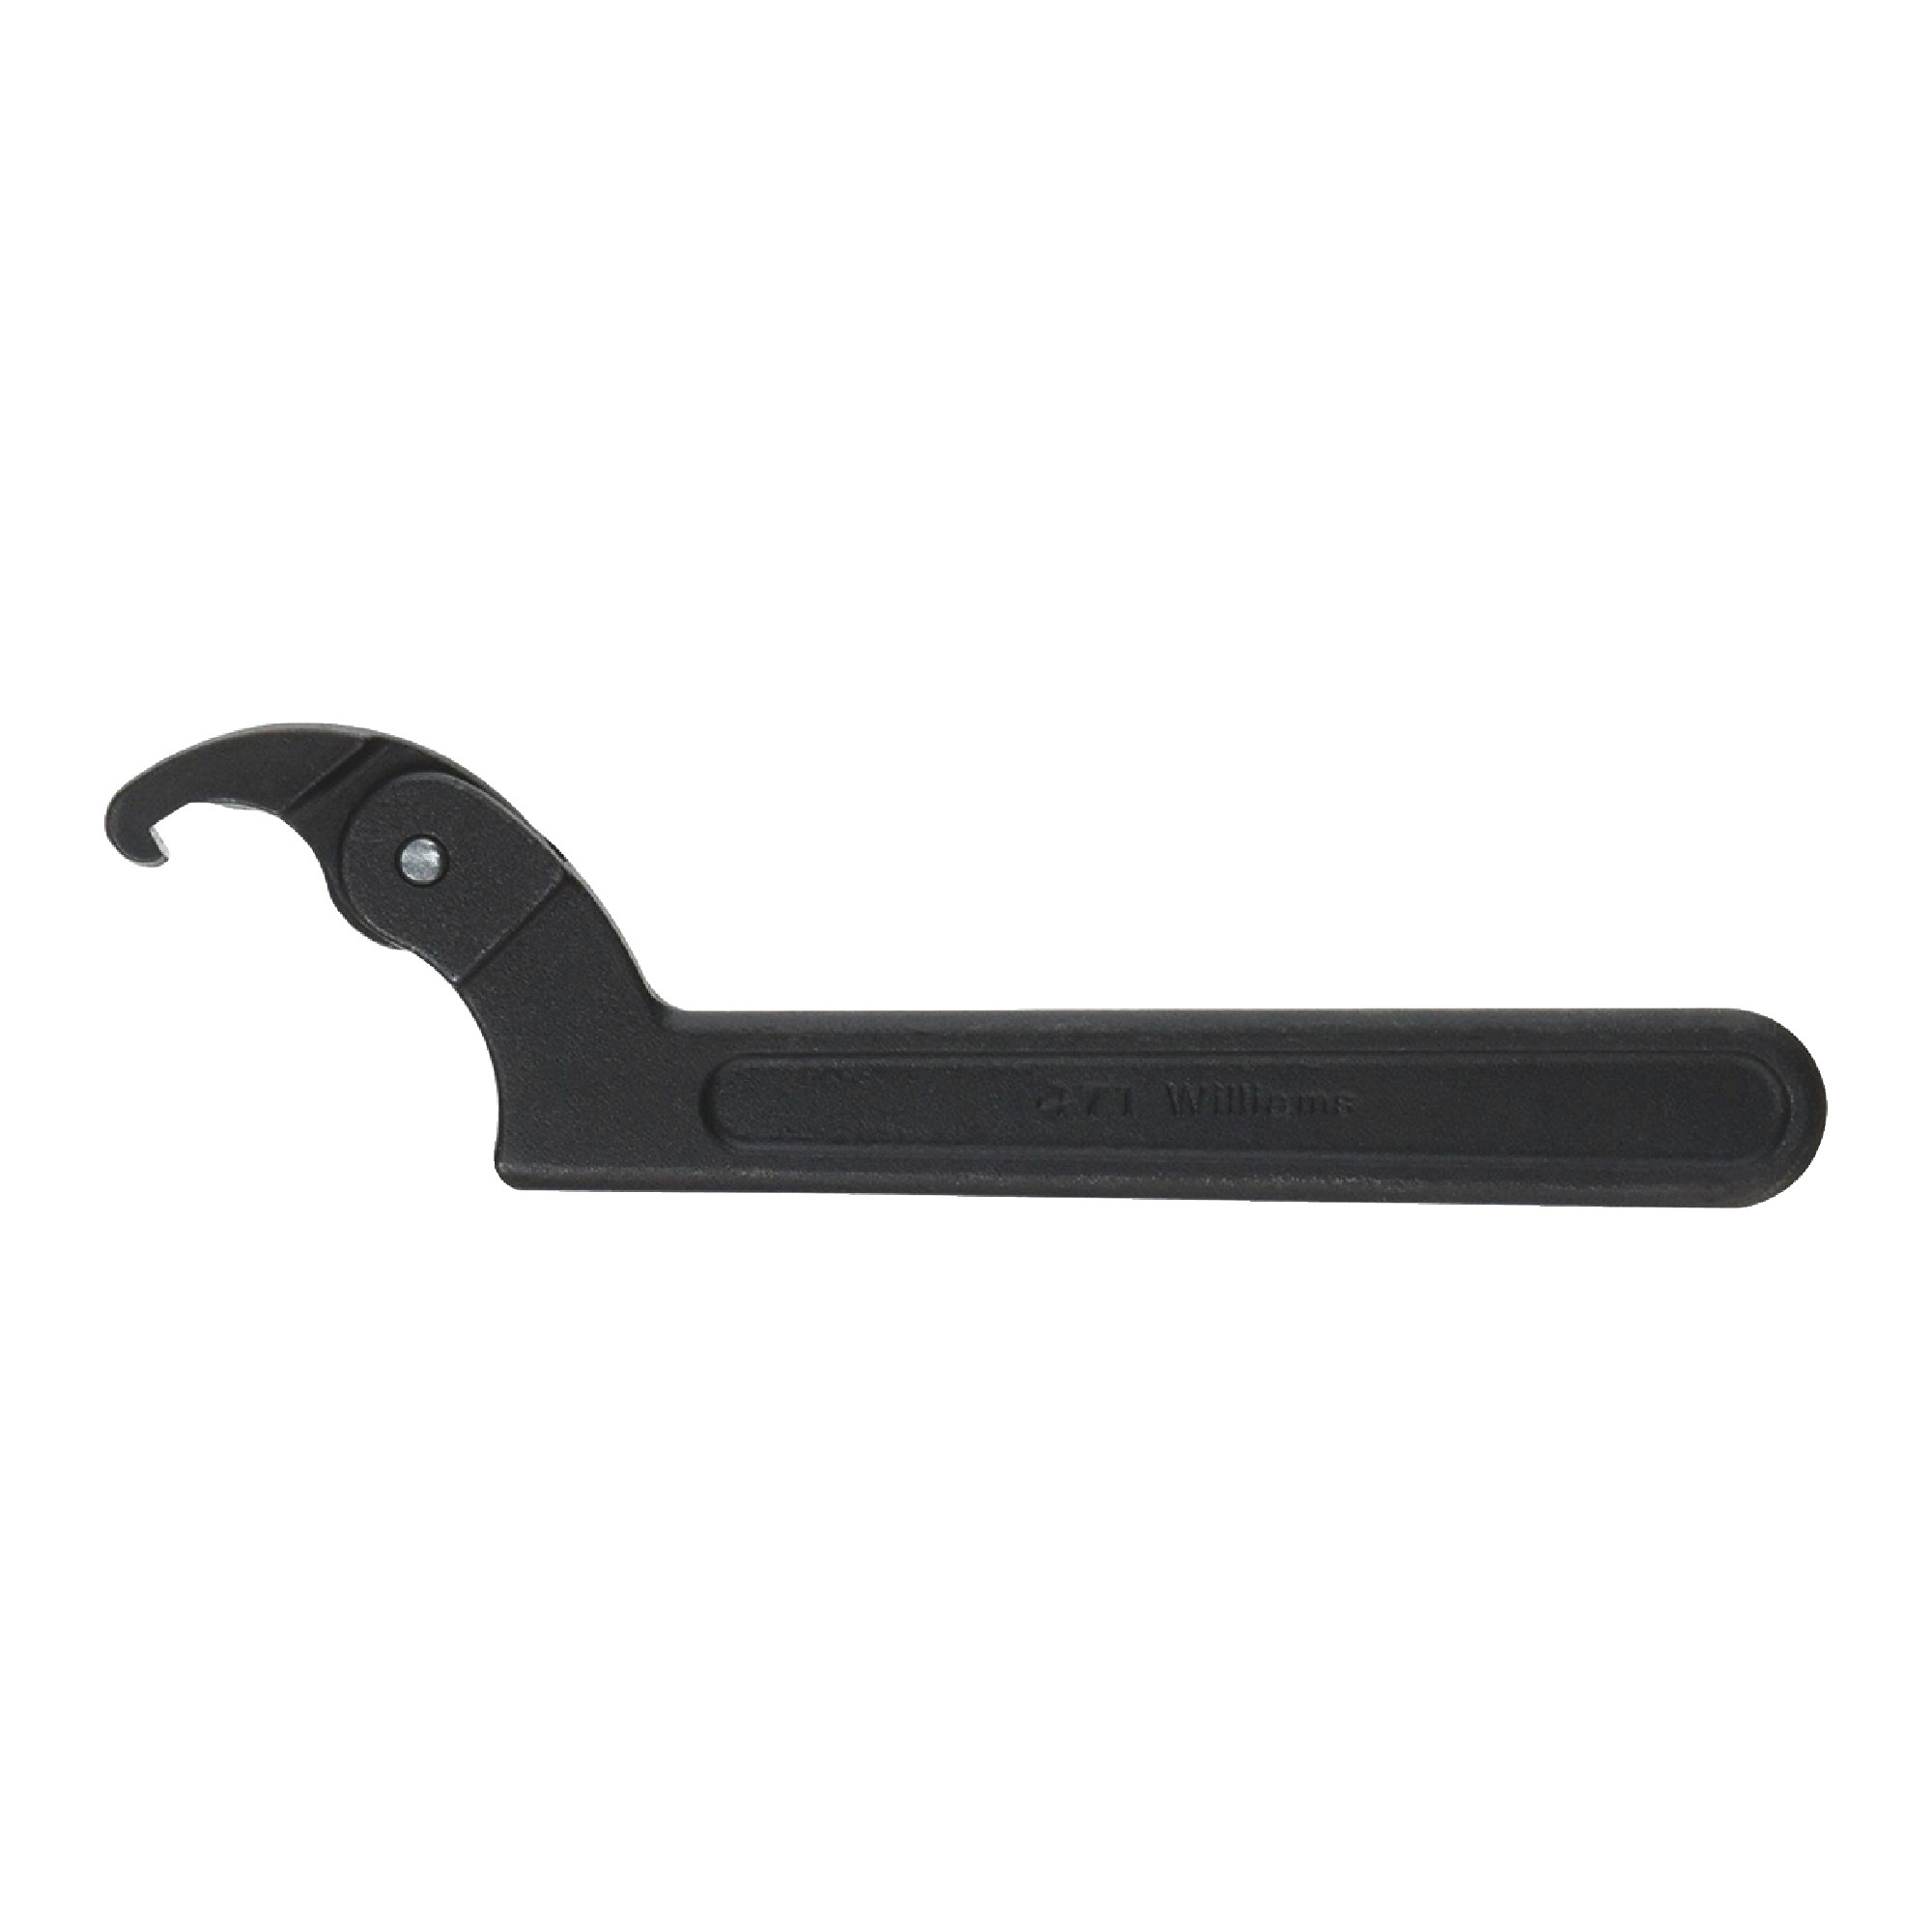 Adjustable Hook Spanner Wrench - Model: 472  Diameter: 1-1/4" - 3"  Height: 5/32"  Overall Length: 7-1/4"